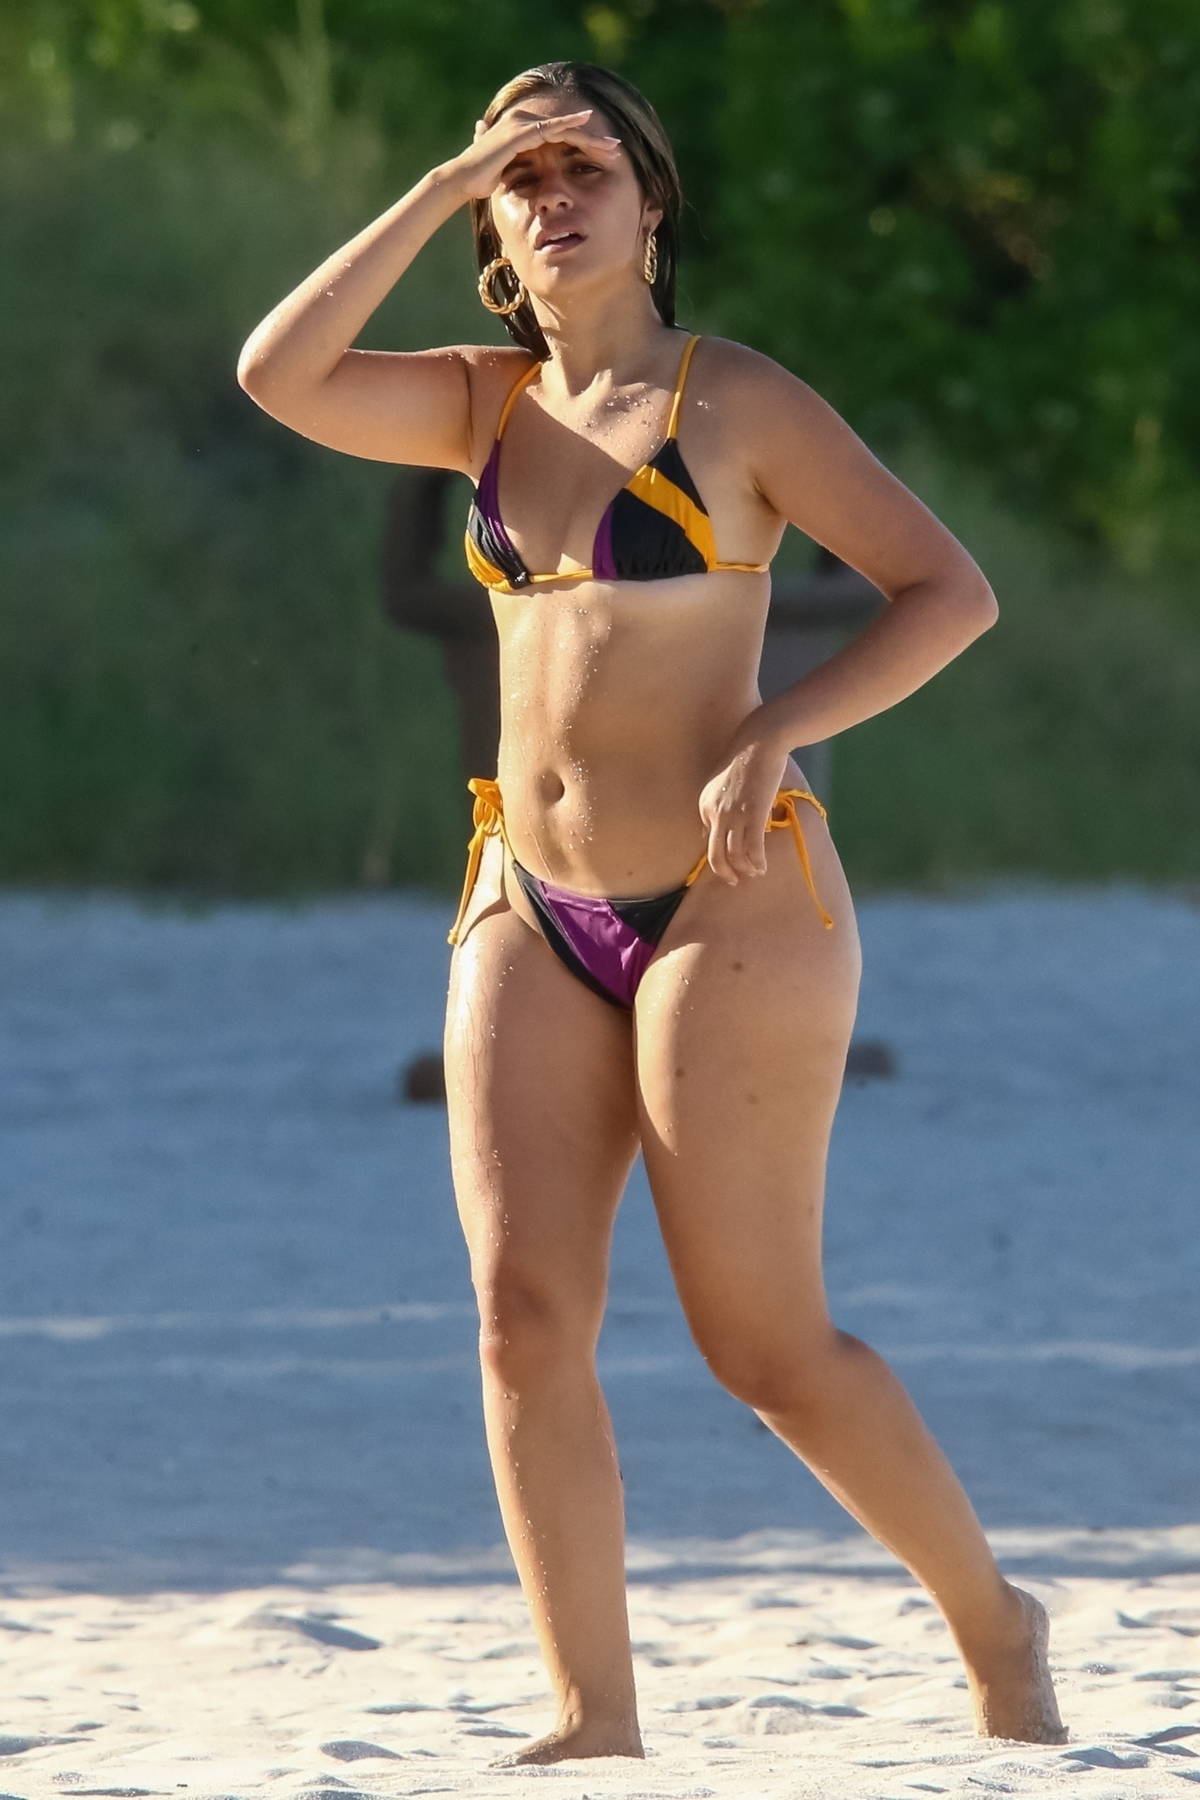 Camila Cabello shows off her beach body in a string bikini as she